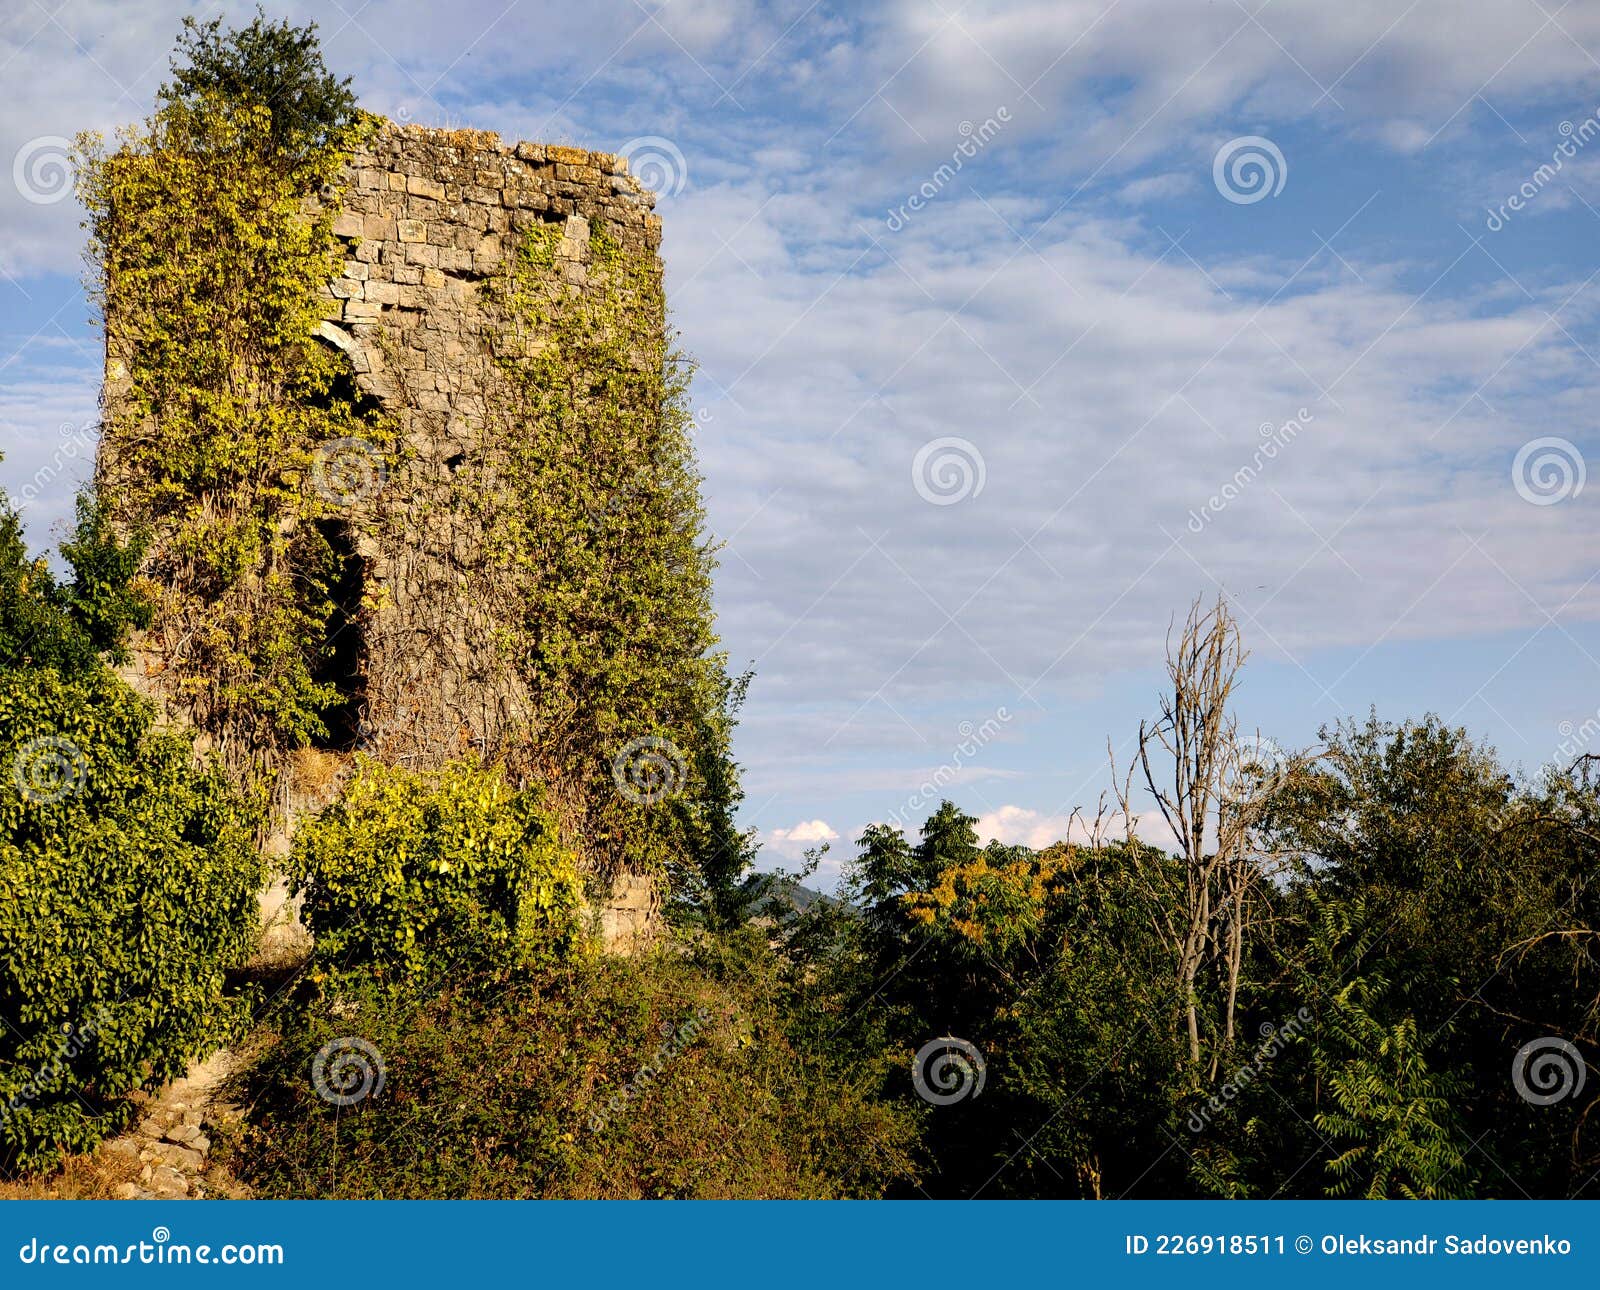 deserted town mendinueta tower in ruins